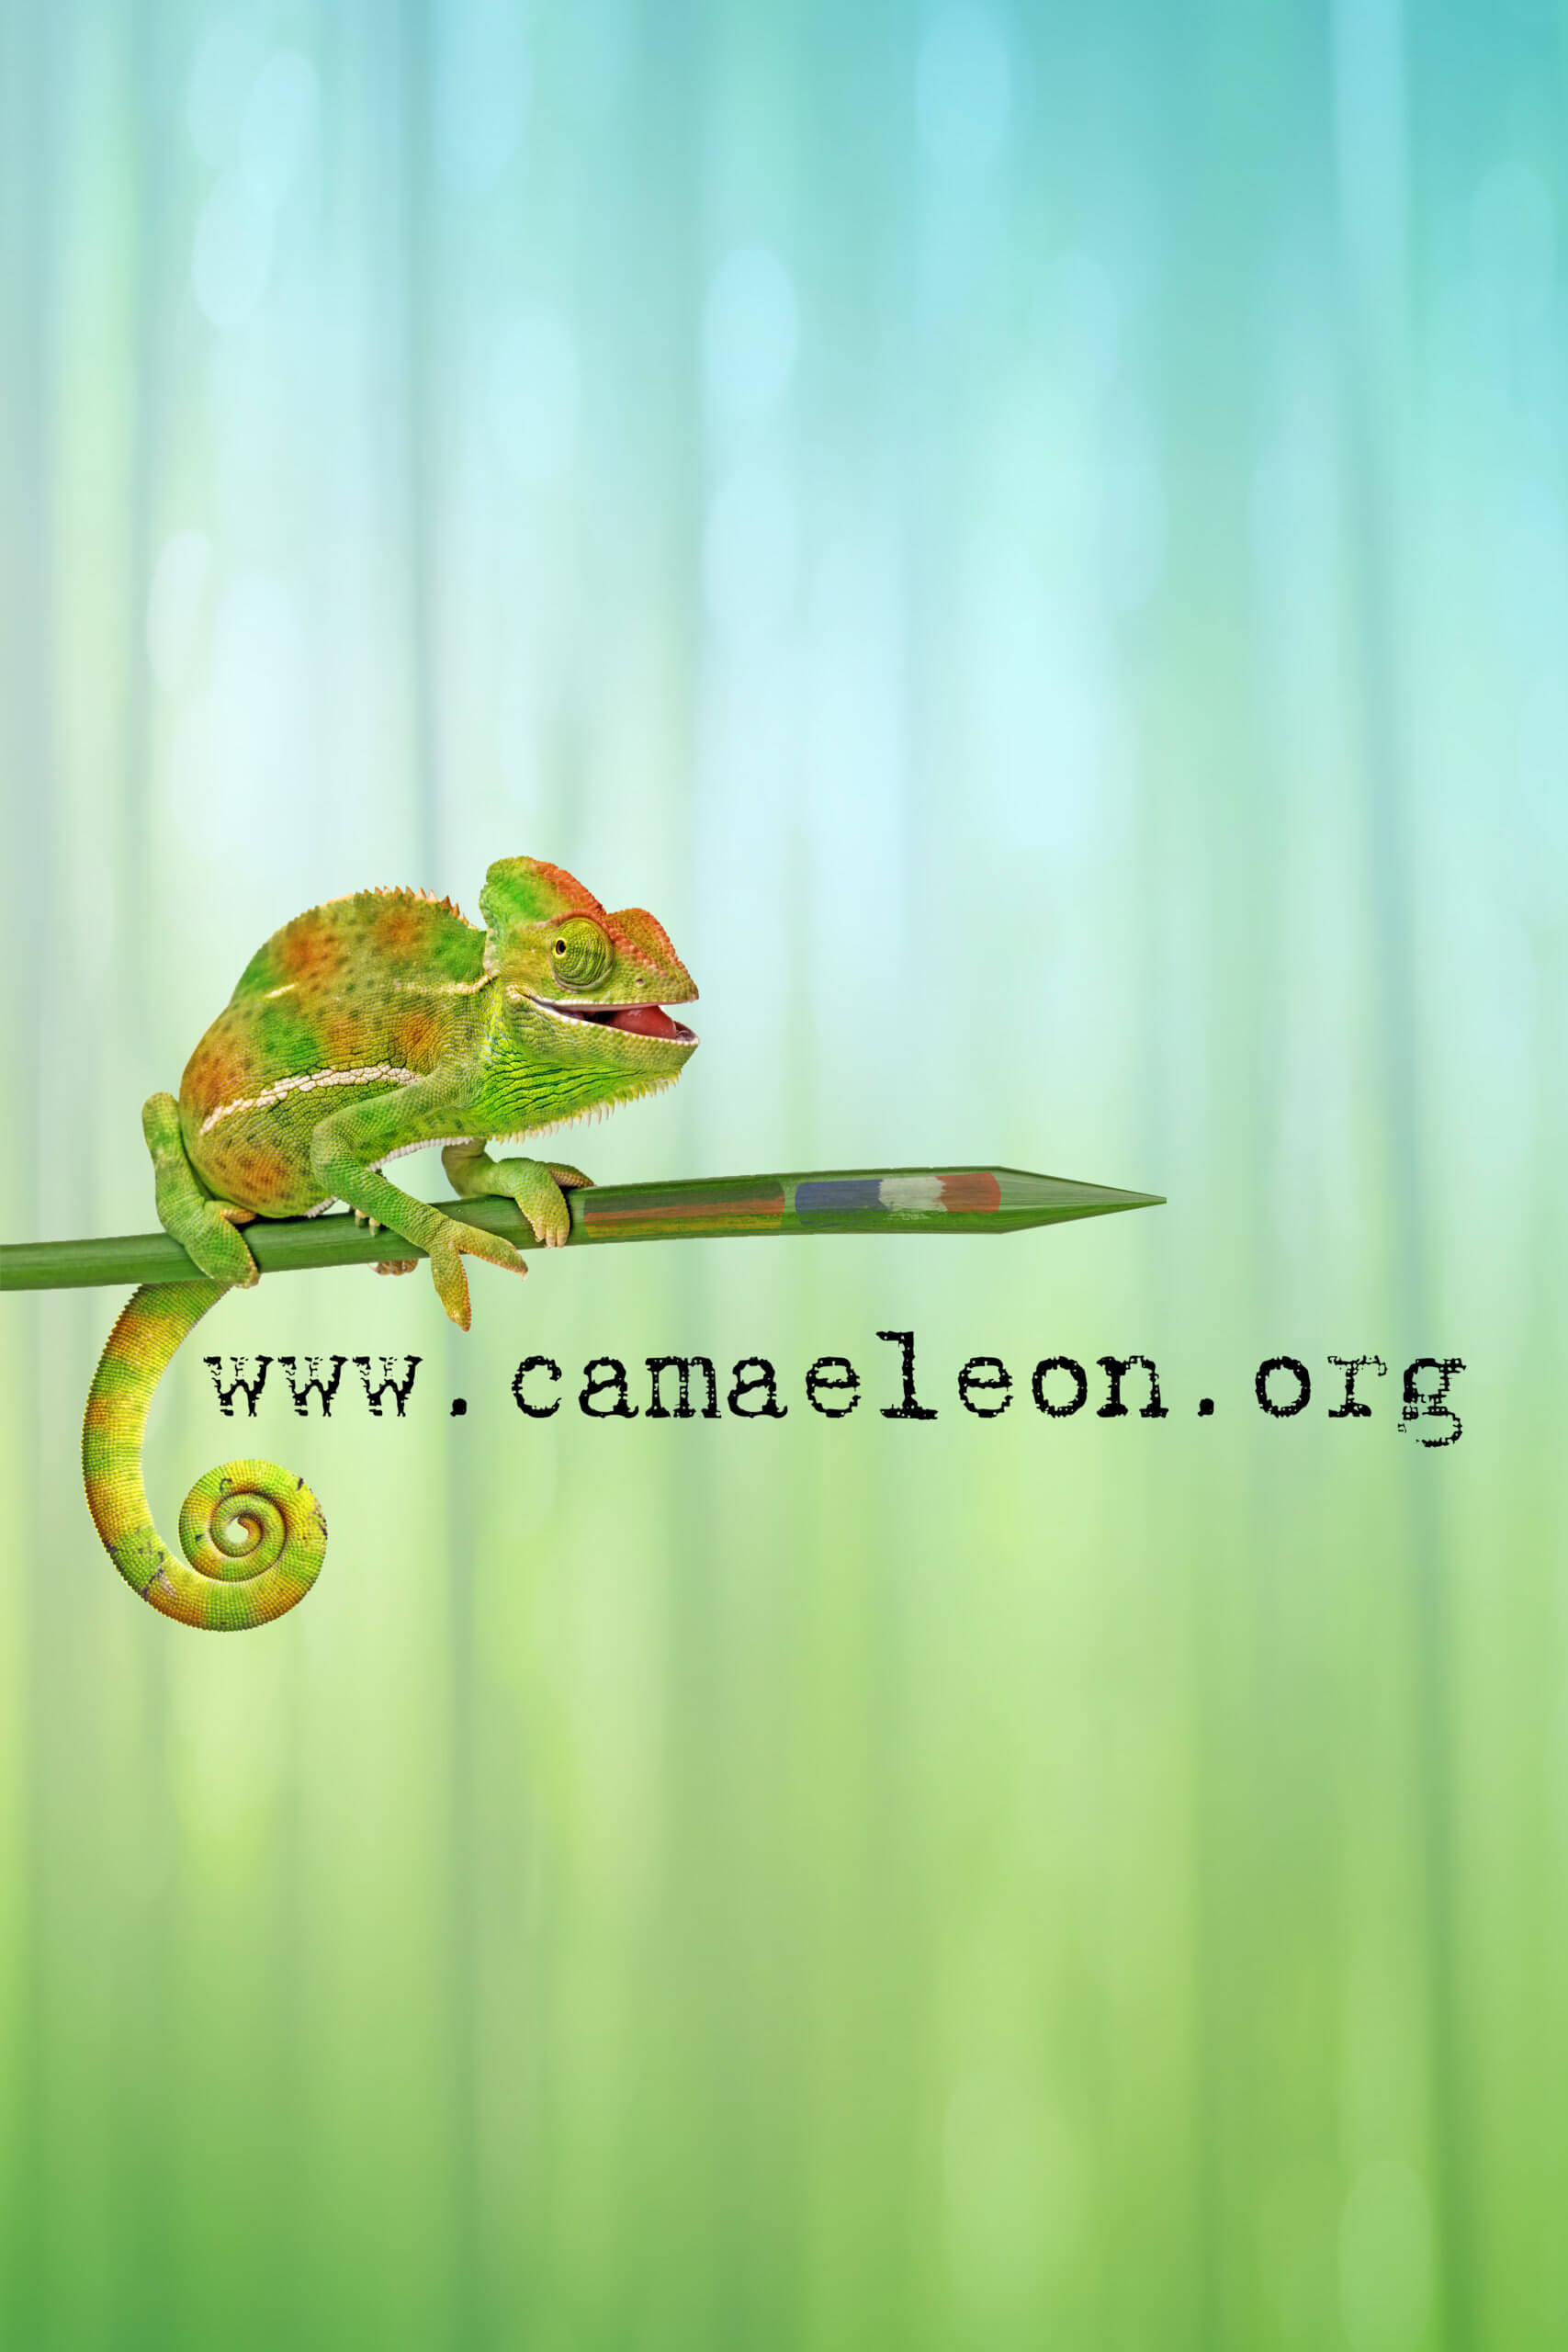 (c) Camaeleon.org